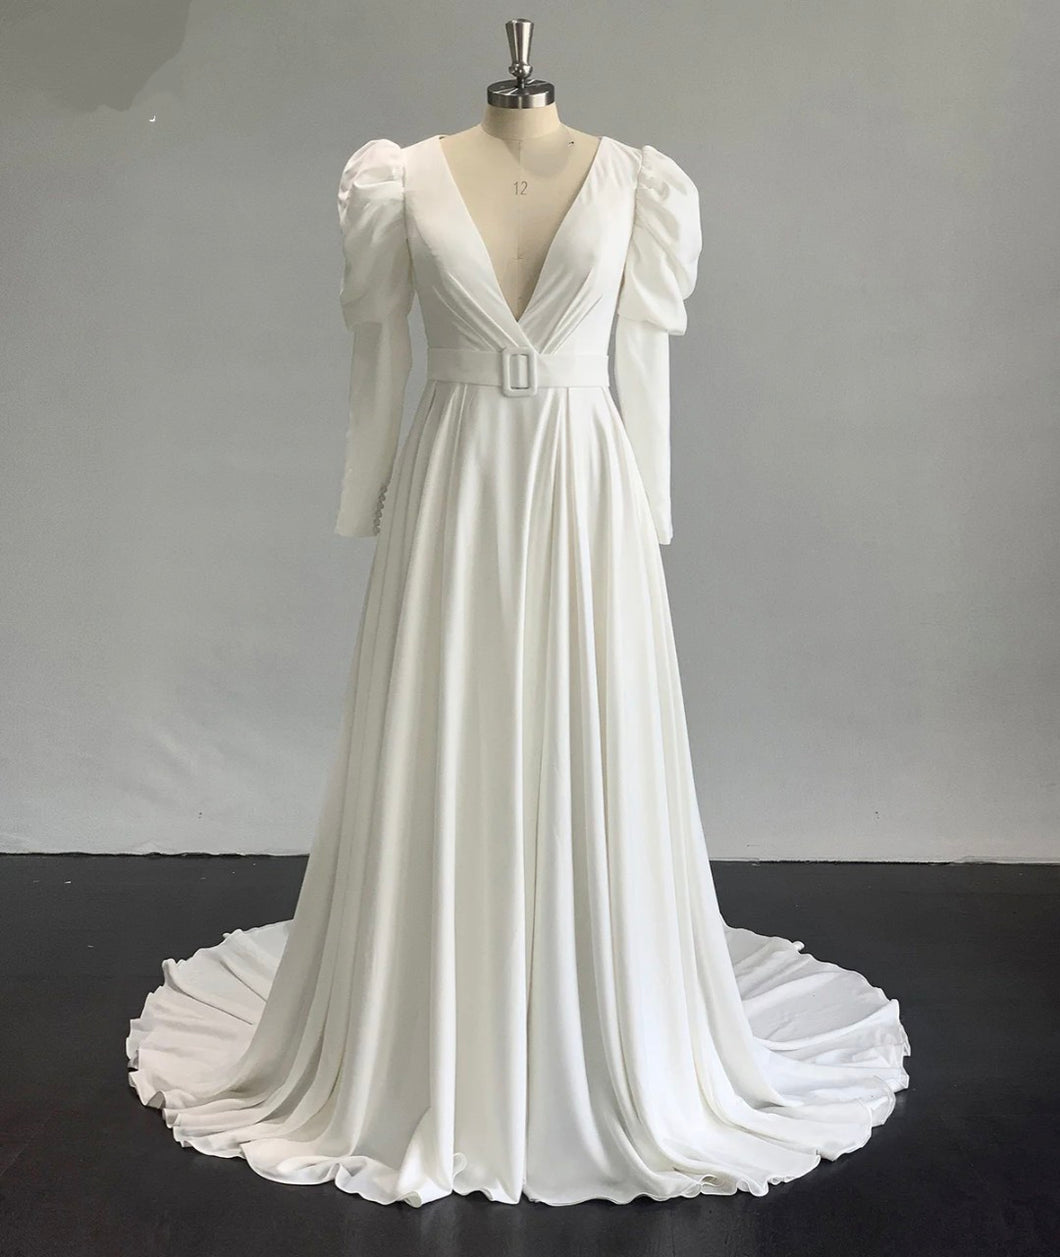 Kimberly - Deep V crepe wedding dress with puff long sleeves